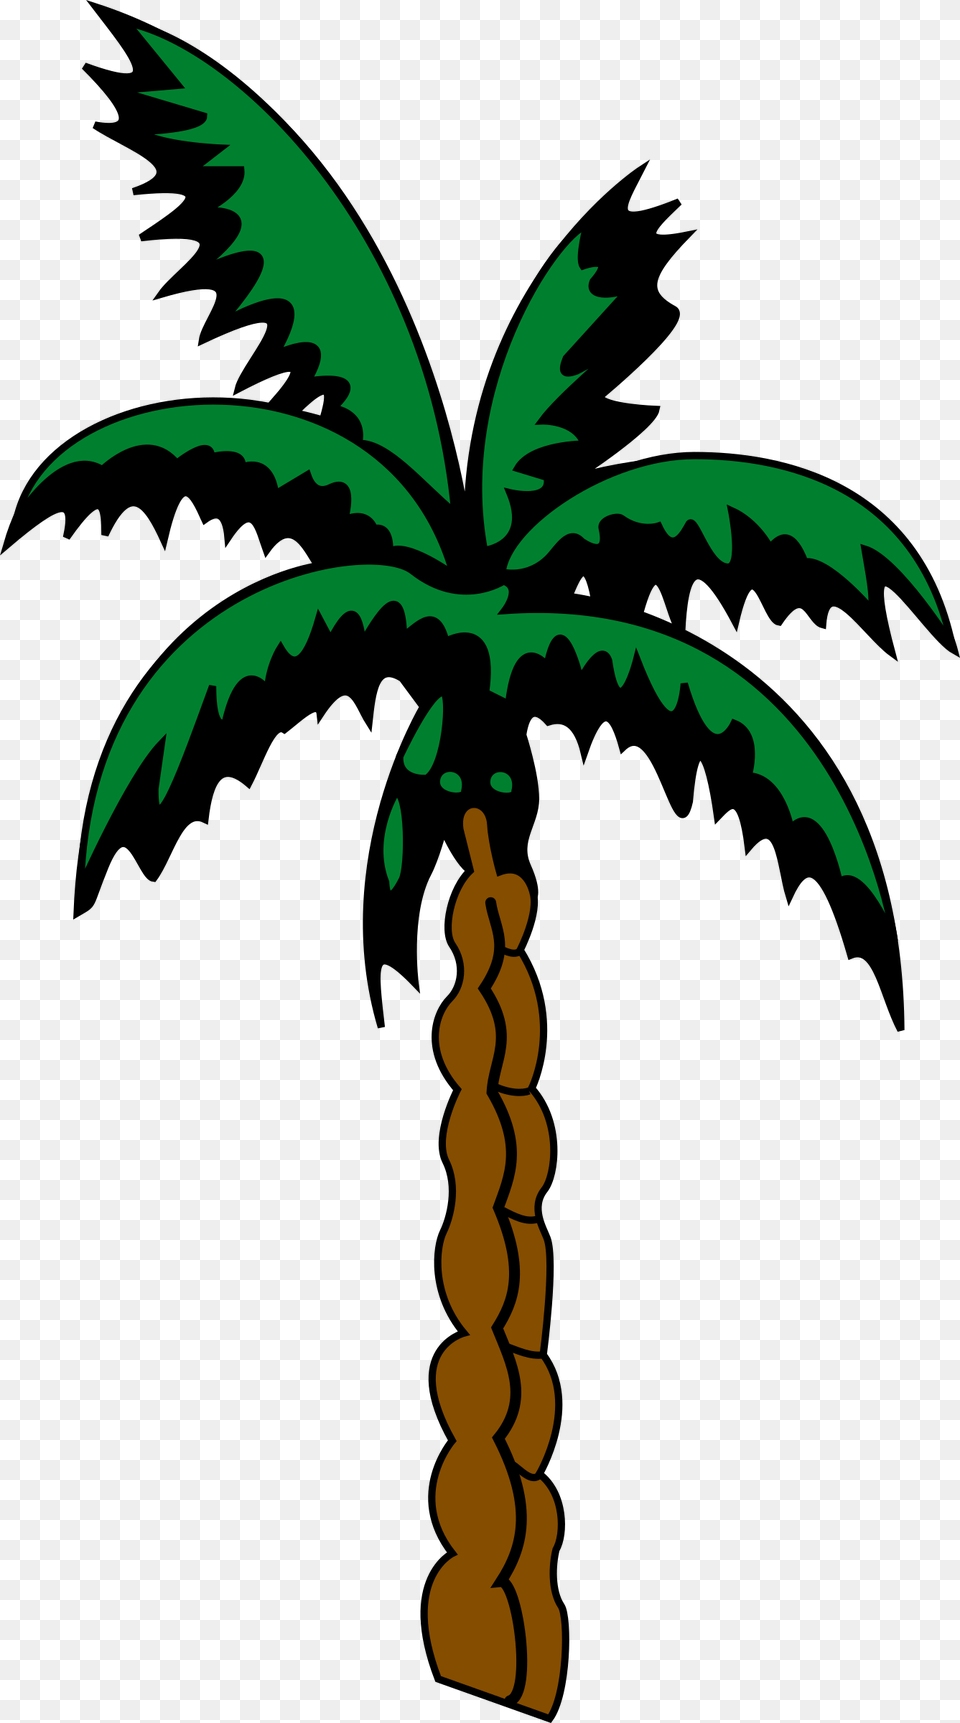 Palm Tree 4 Clip Arts Gambar Pohon Palem Kartun, Palm Tree, Plant, Cross, Symbol Png Image